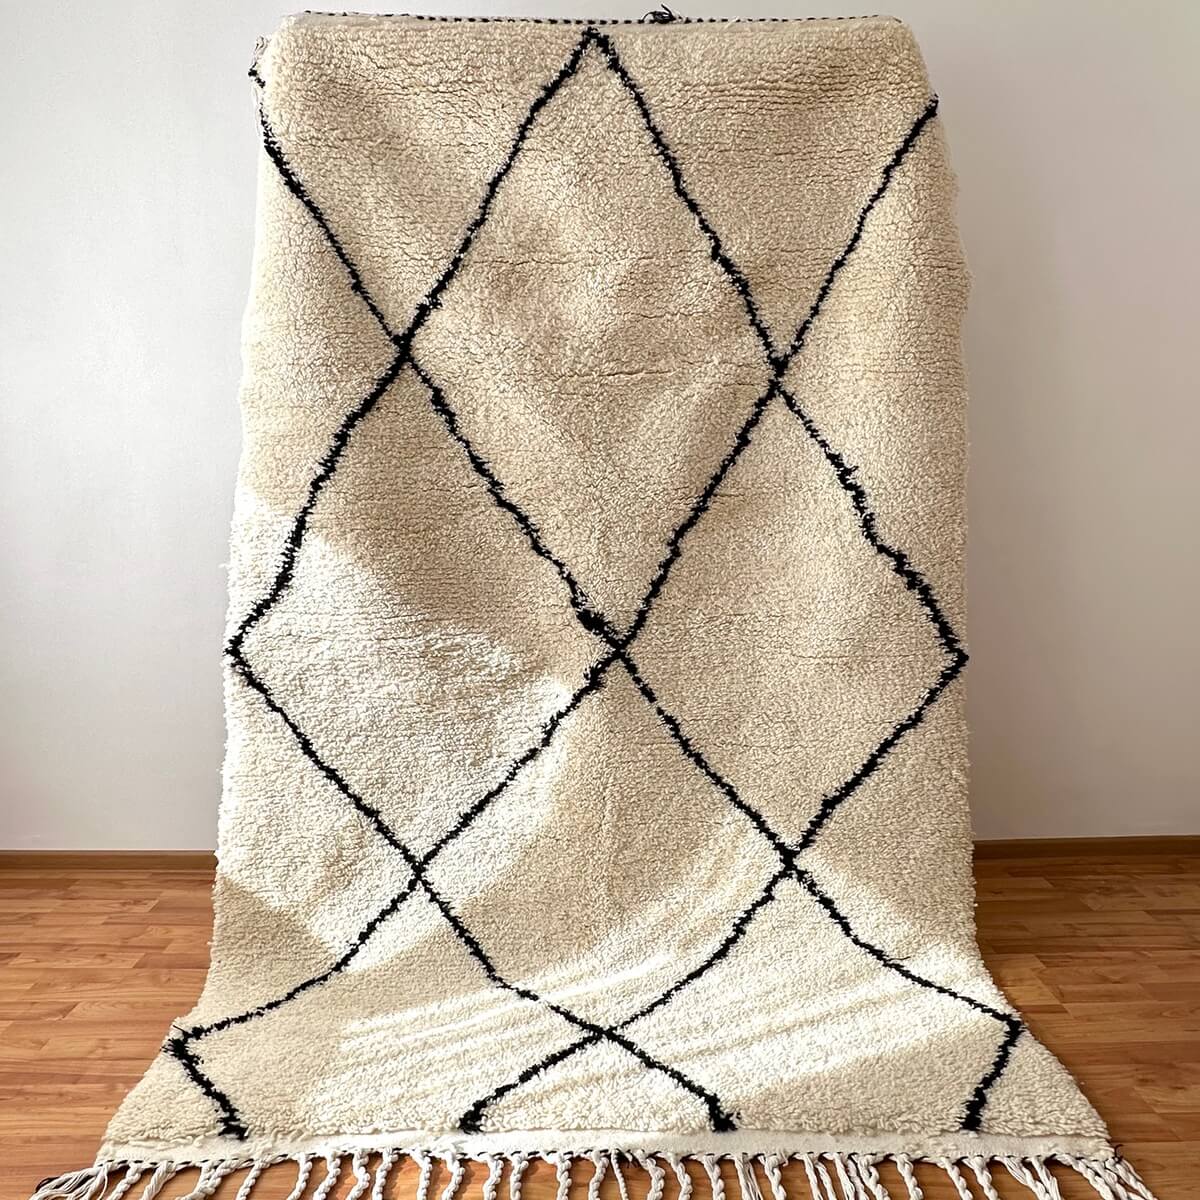 covor modern gros si pufos din lana creat manual in maroc, model alb cu dungi negre asimetrice